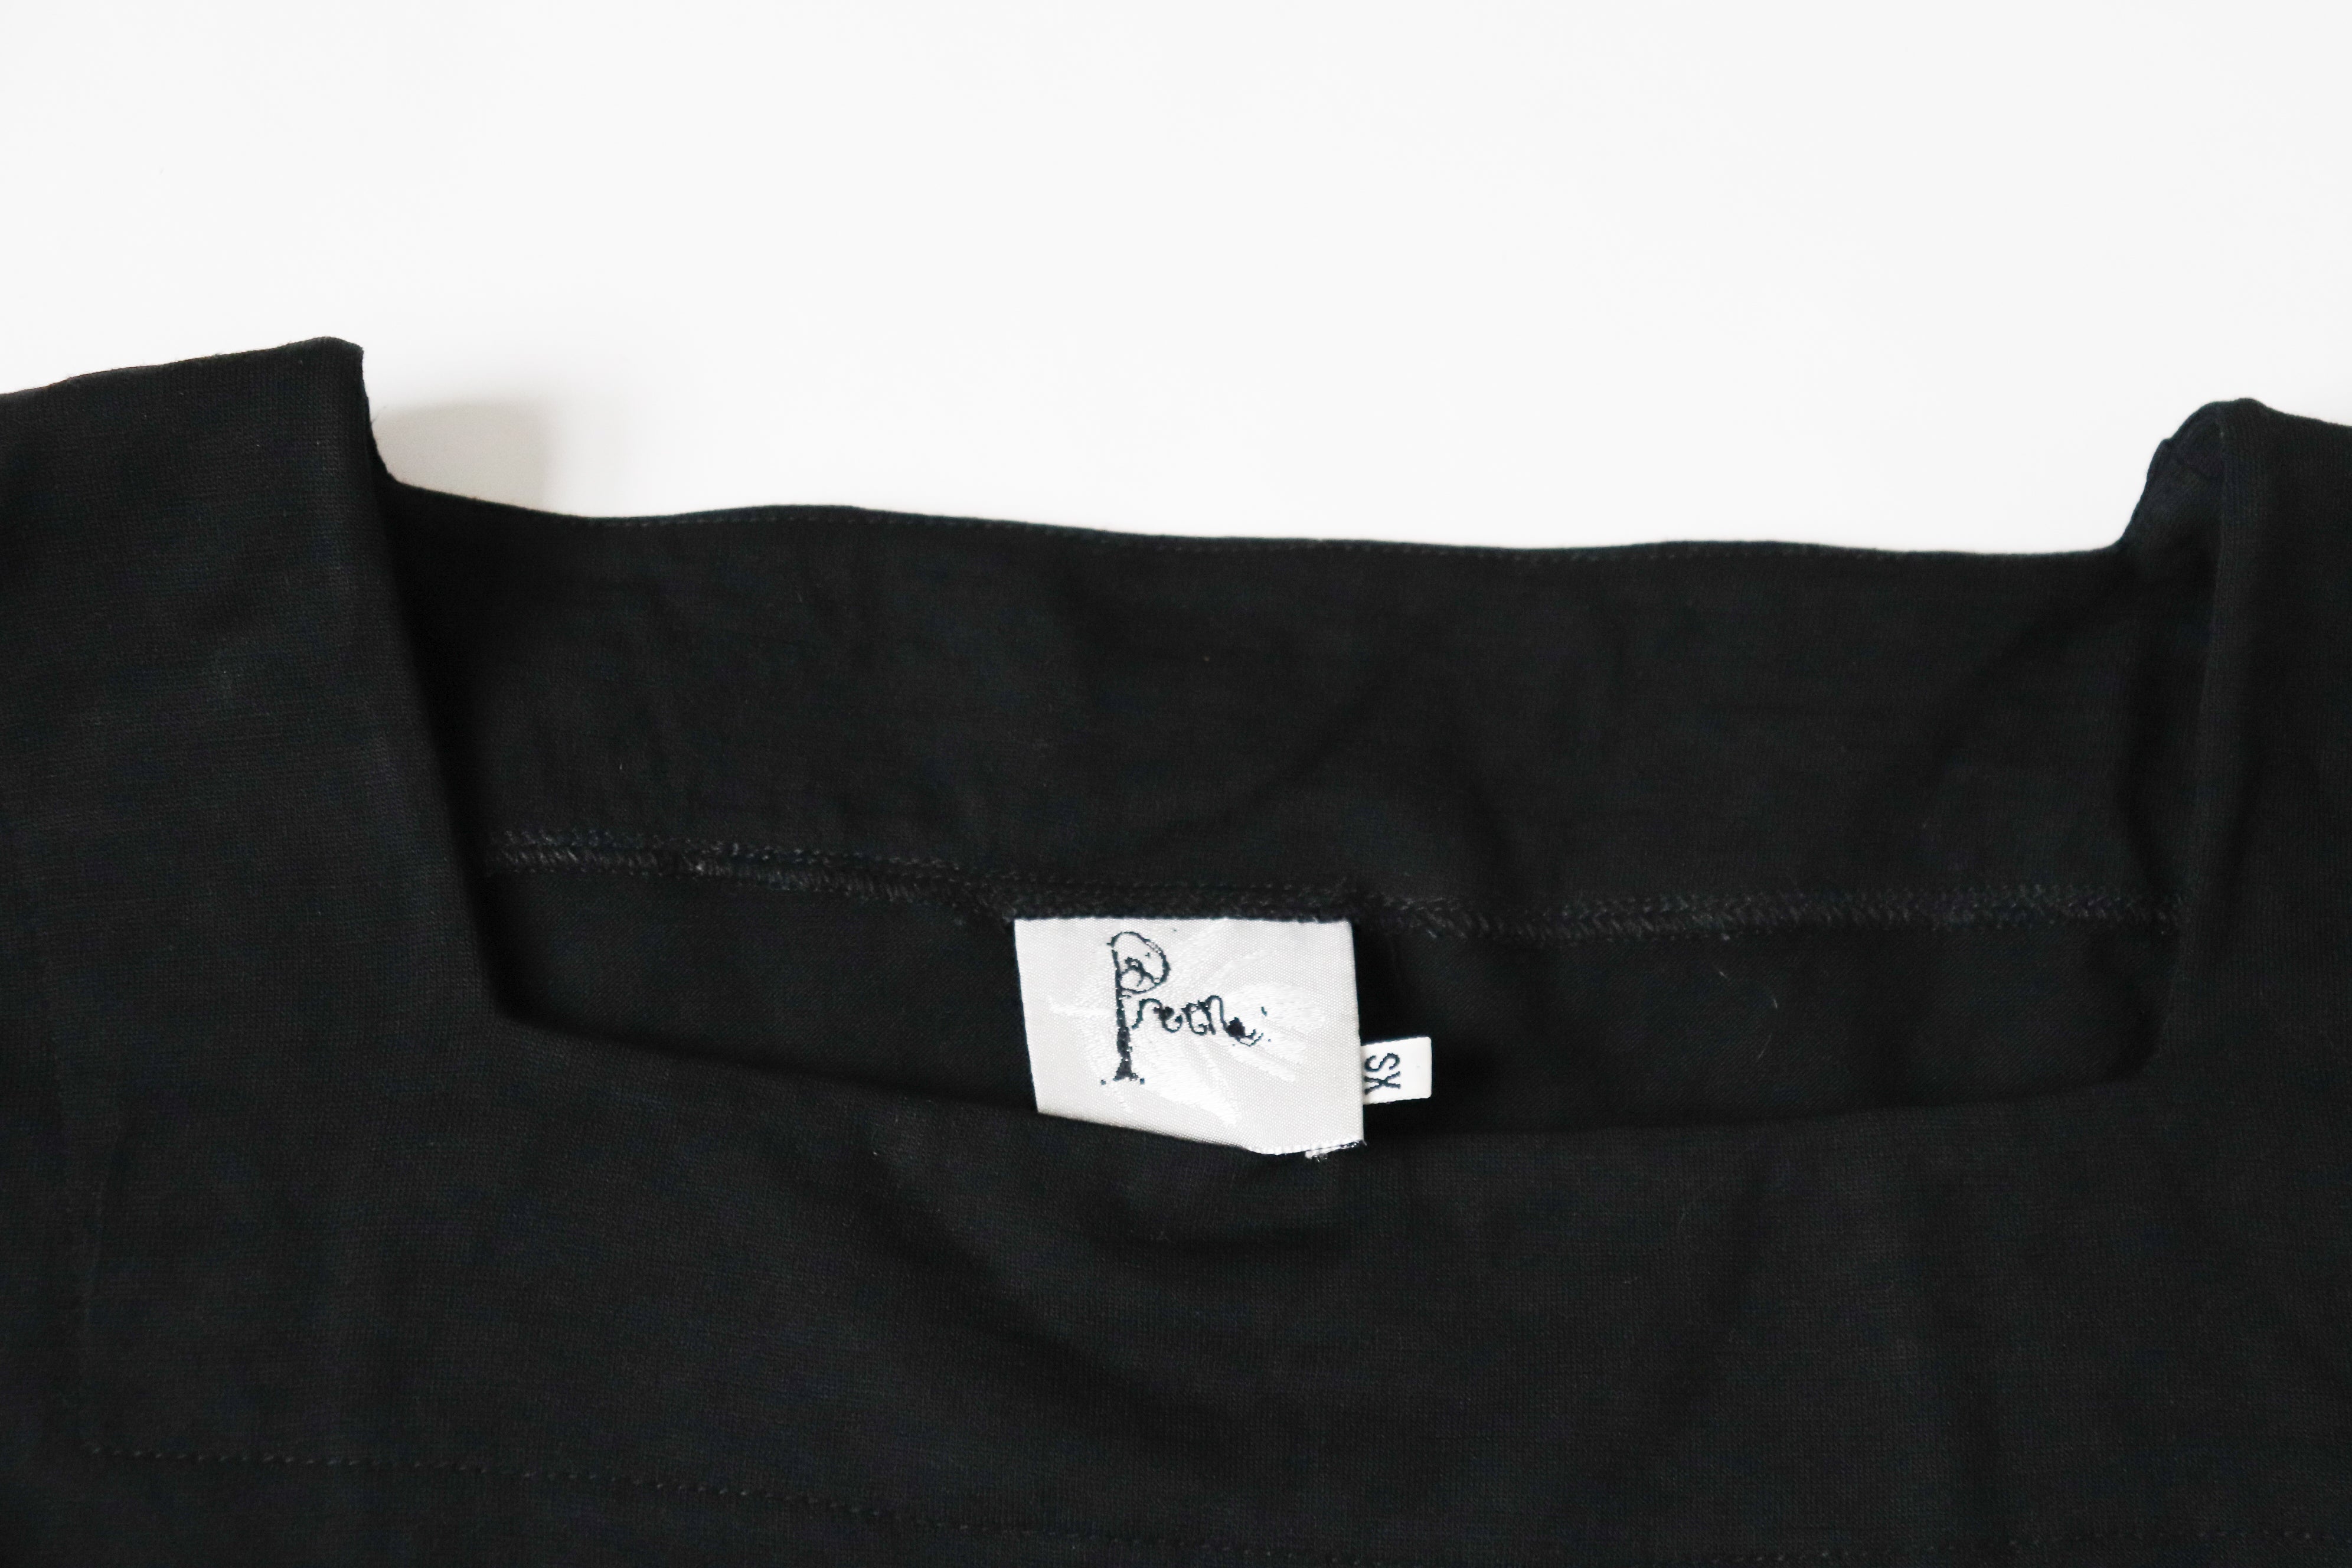 Preen Thornton Bragazzi Kimono Sleeve Top - Black - Label XS - Fit UK 10 / S